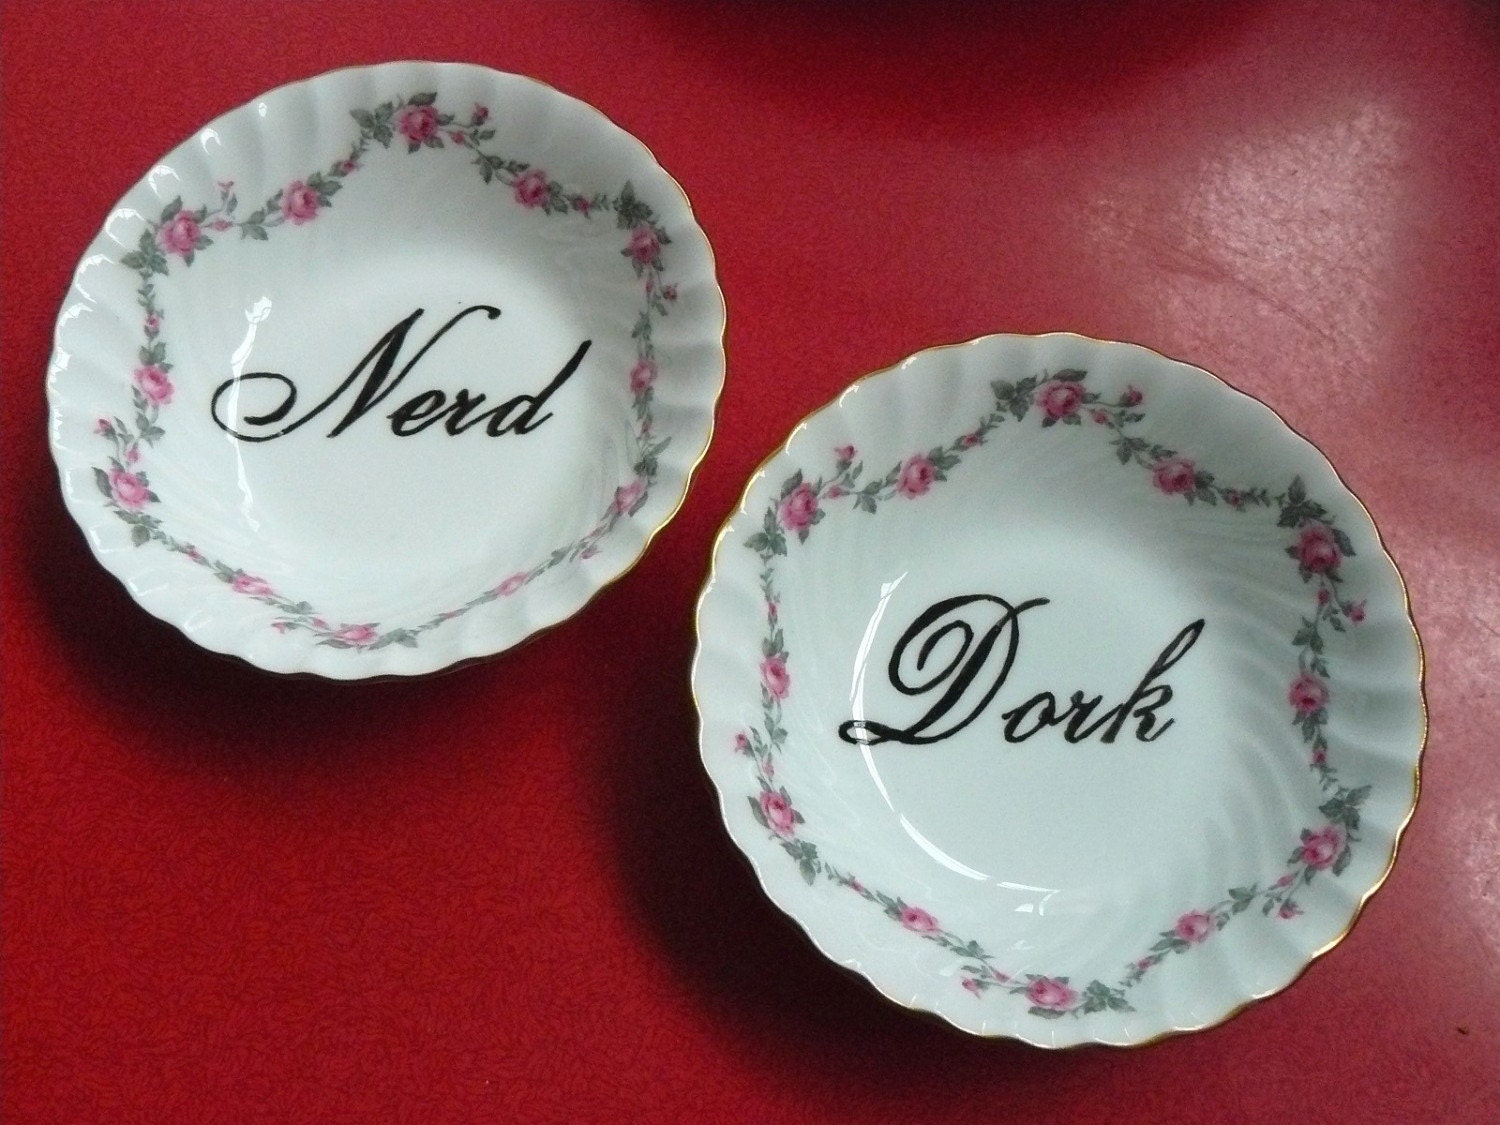 Nerd Dork snack bowls